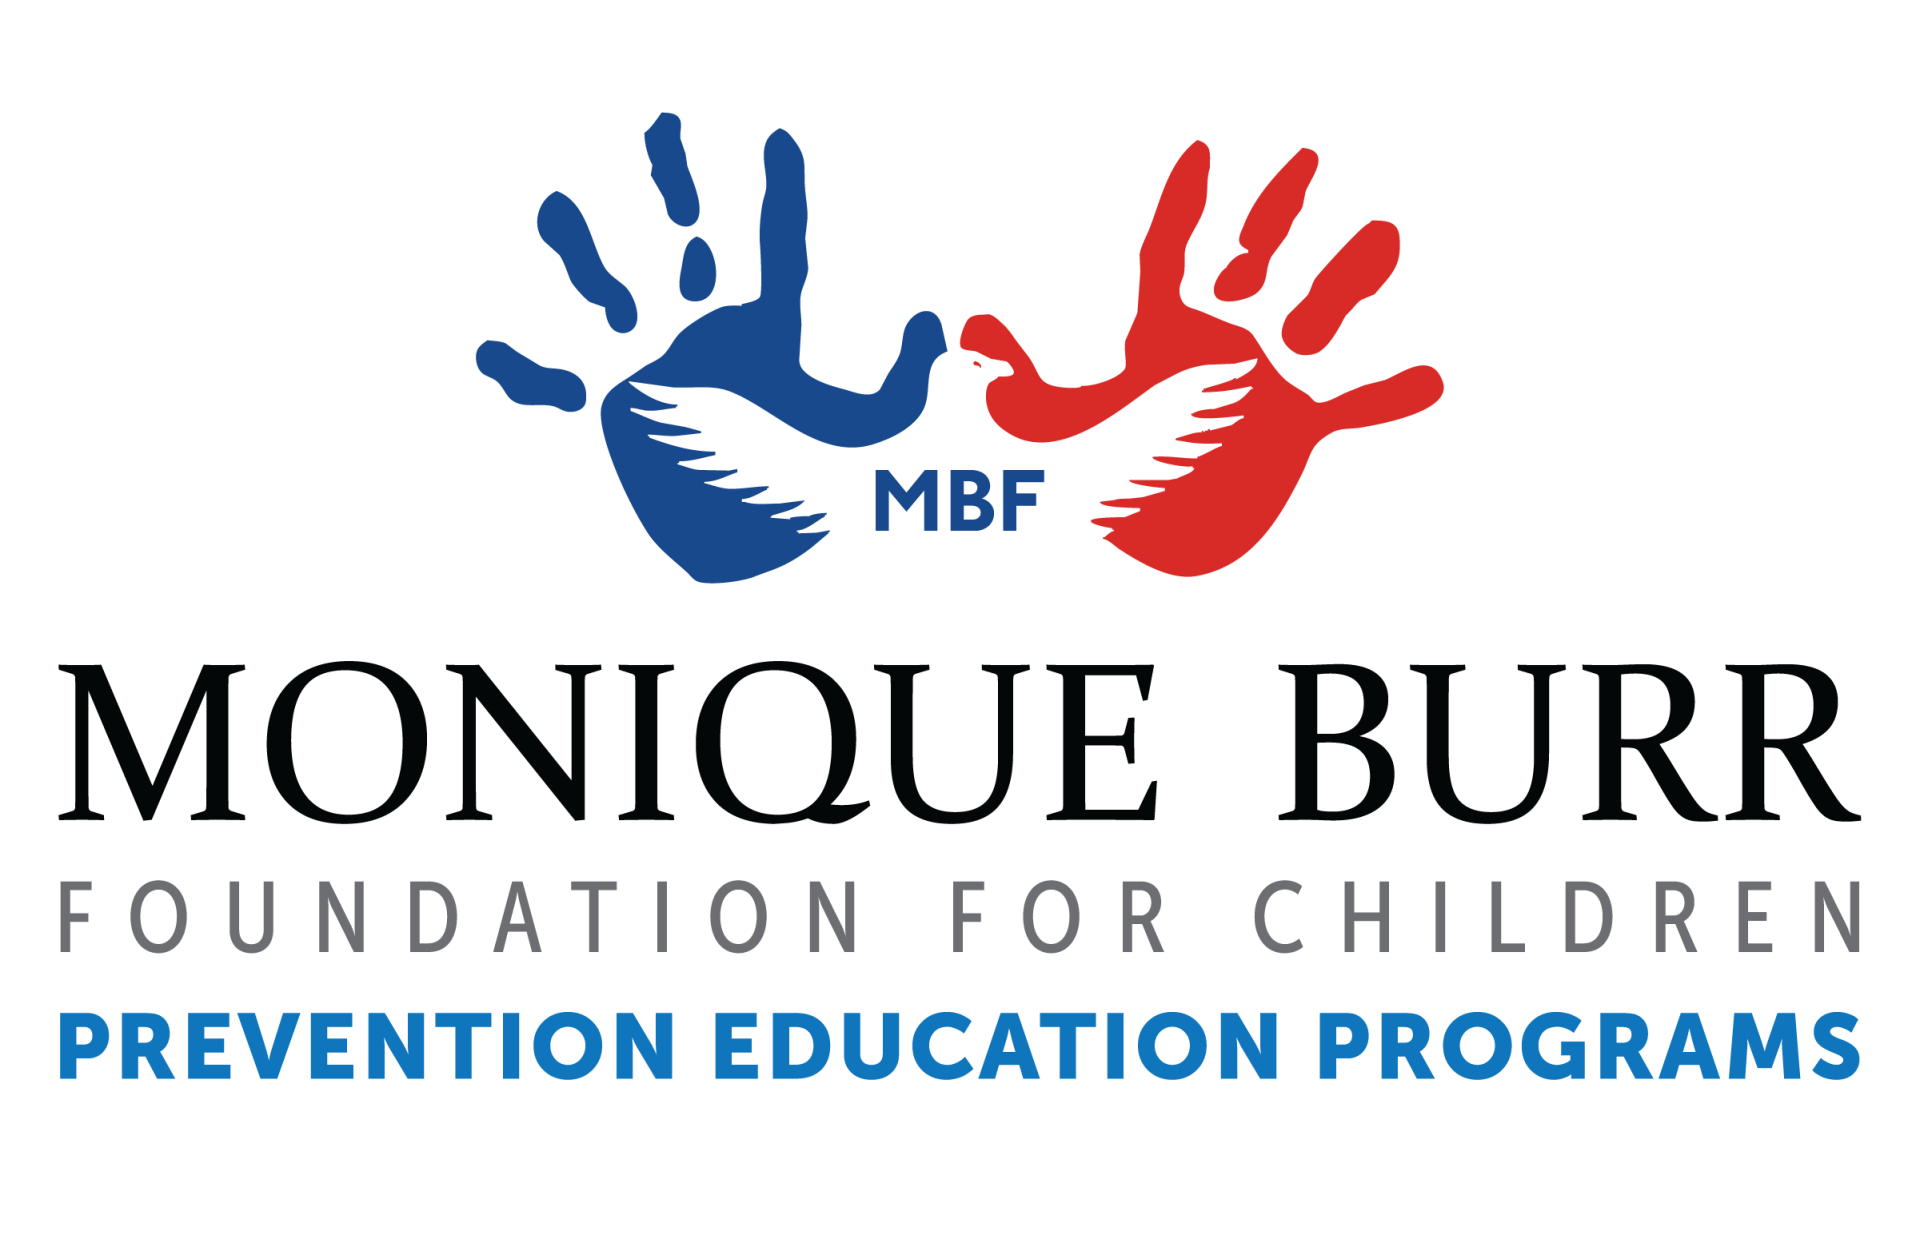 Monique Burr Foundation for Children is ACV's community Partner.